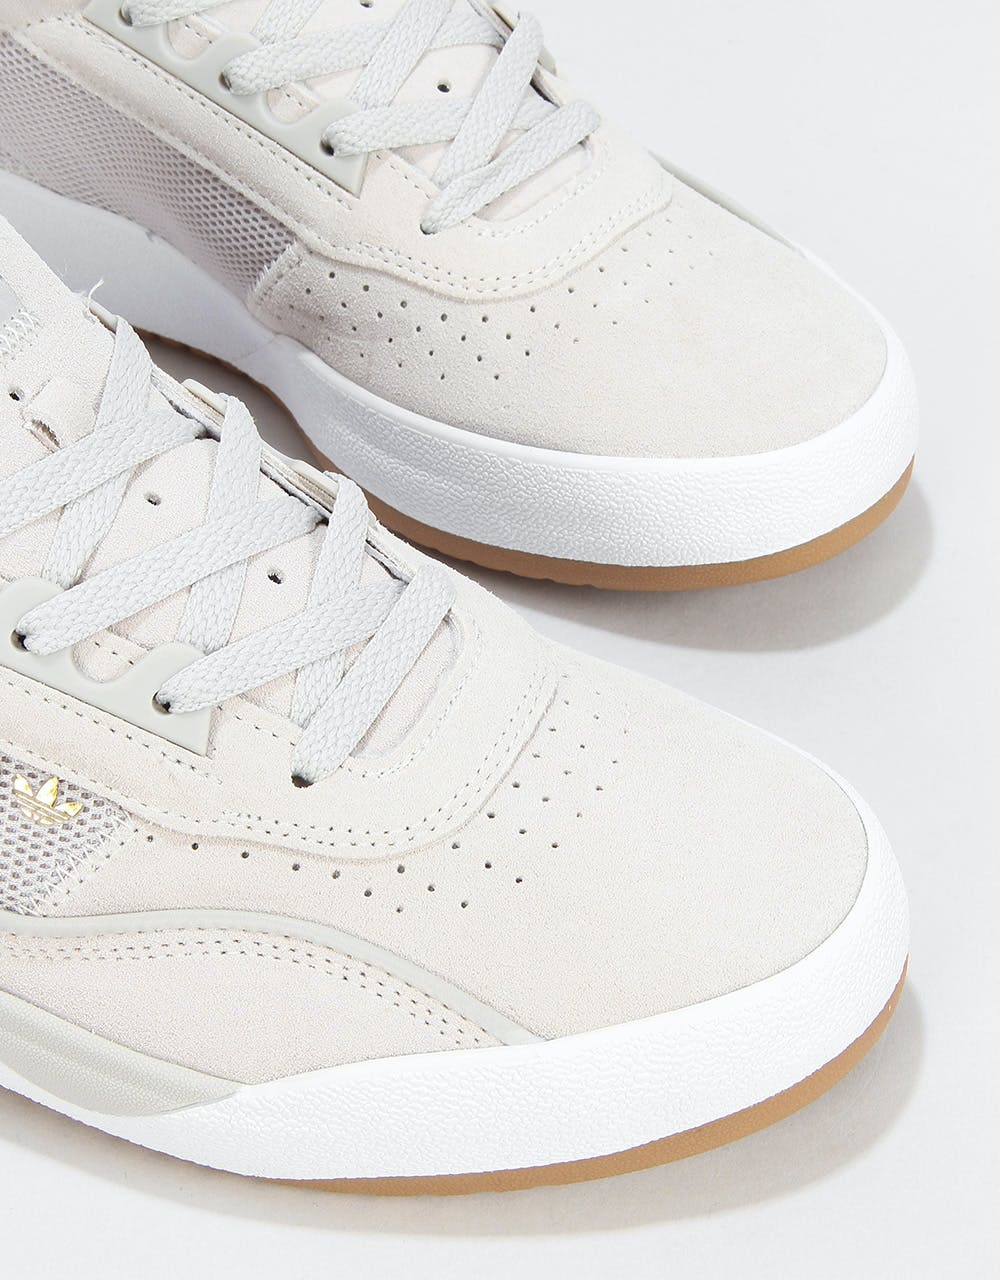 Adidas Liberty Cup Skate Shoes - White/Gum/Gold Metallic